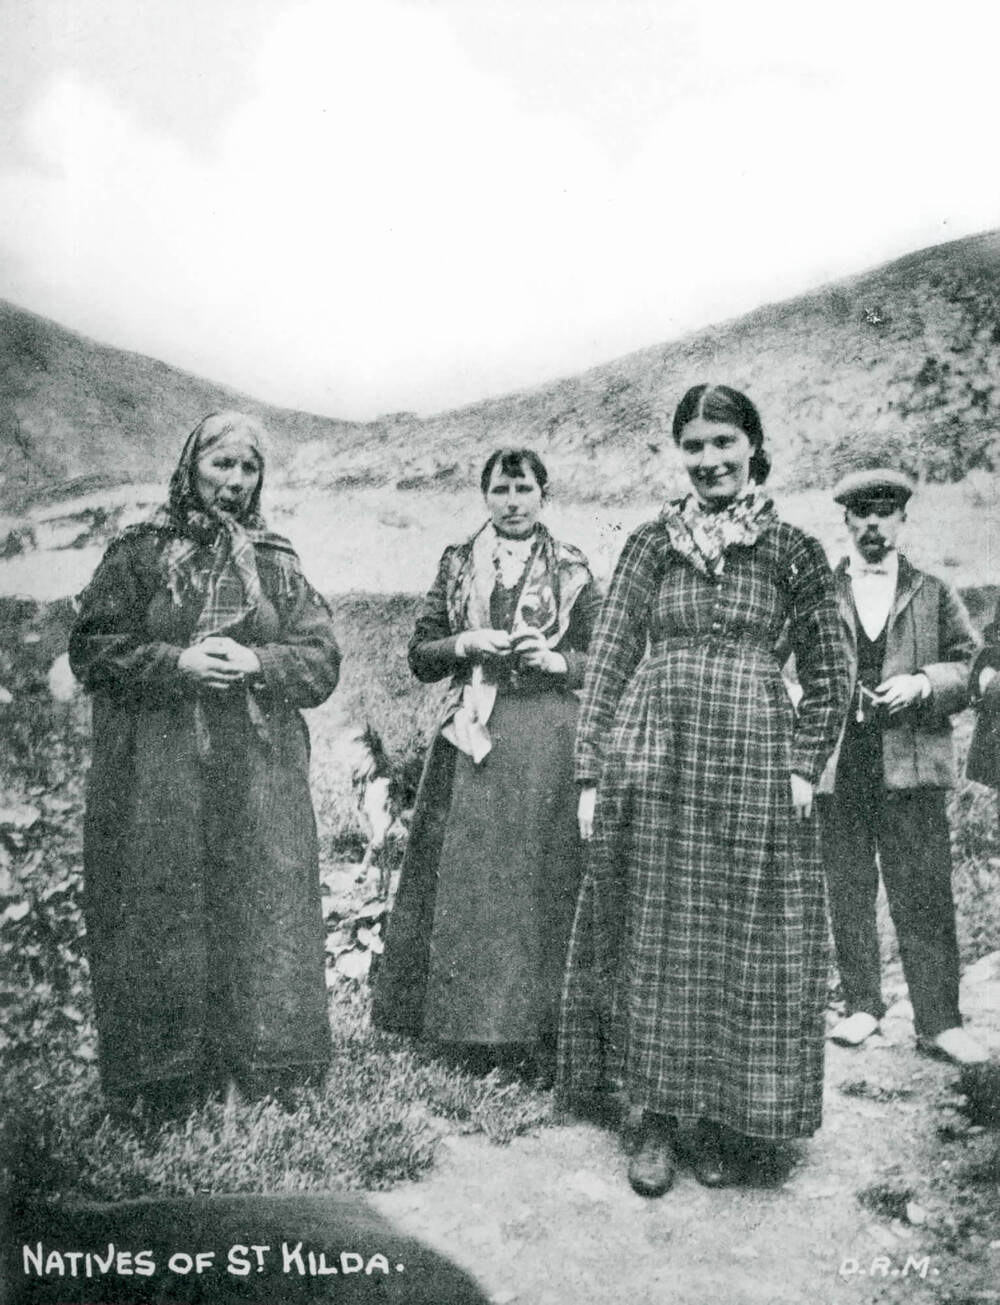 Natives of St Kilda